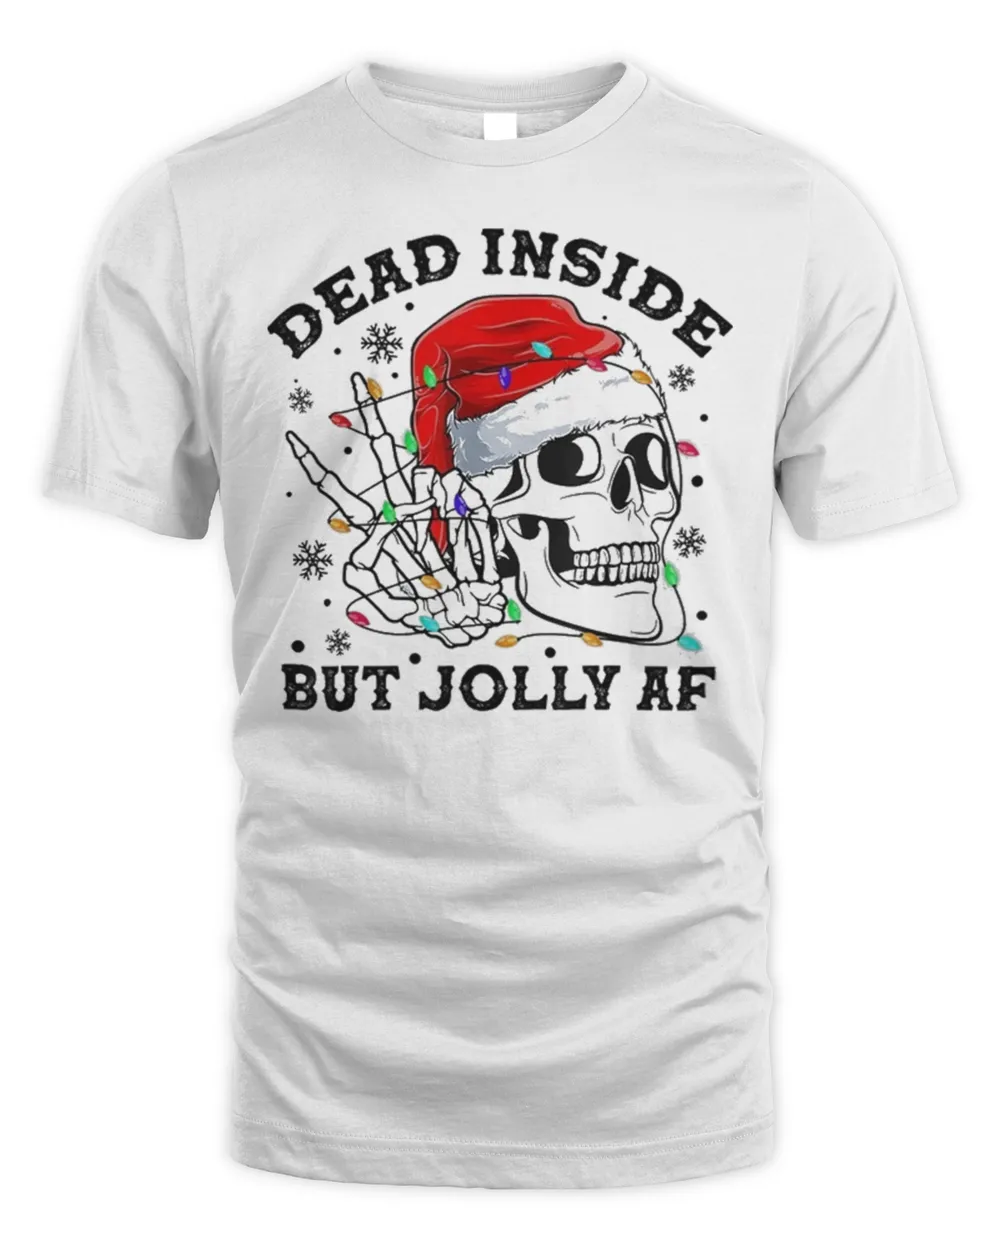 Dead Inside But Jolly AF Christmas Shirt